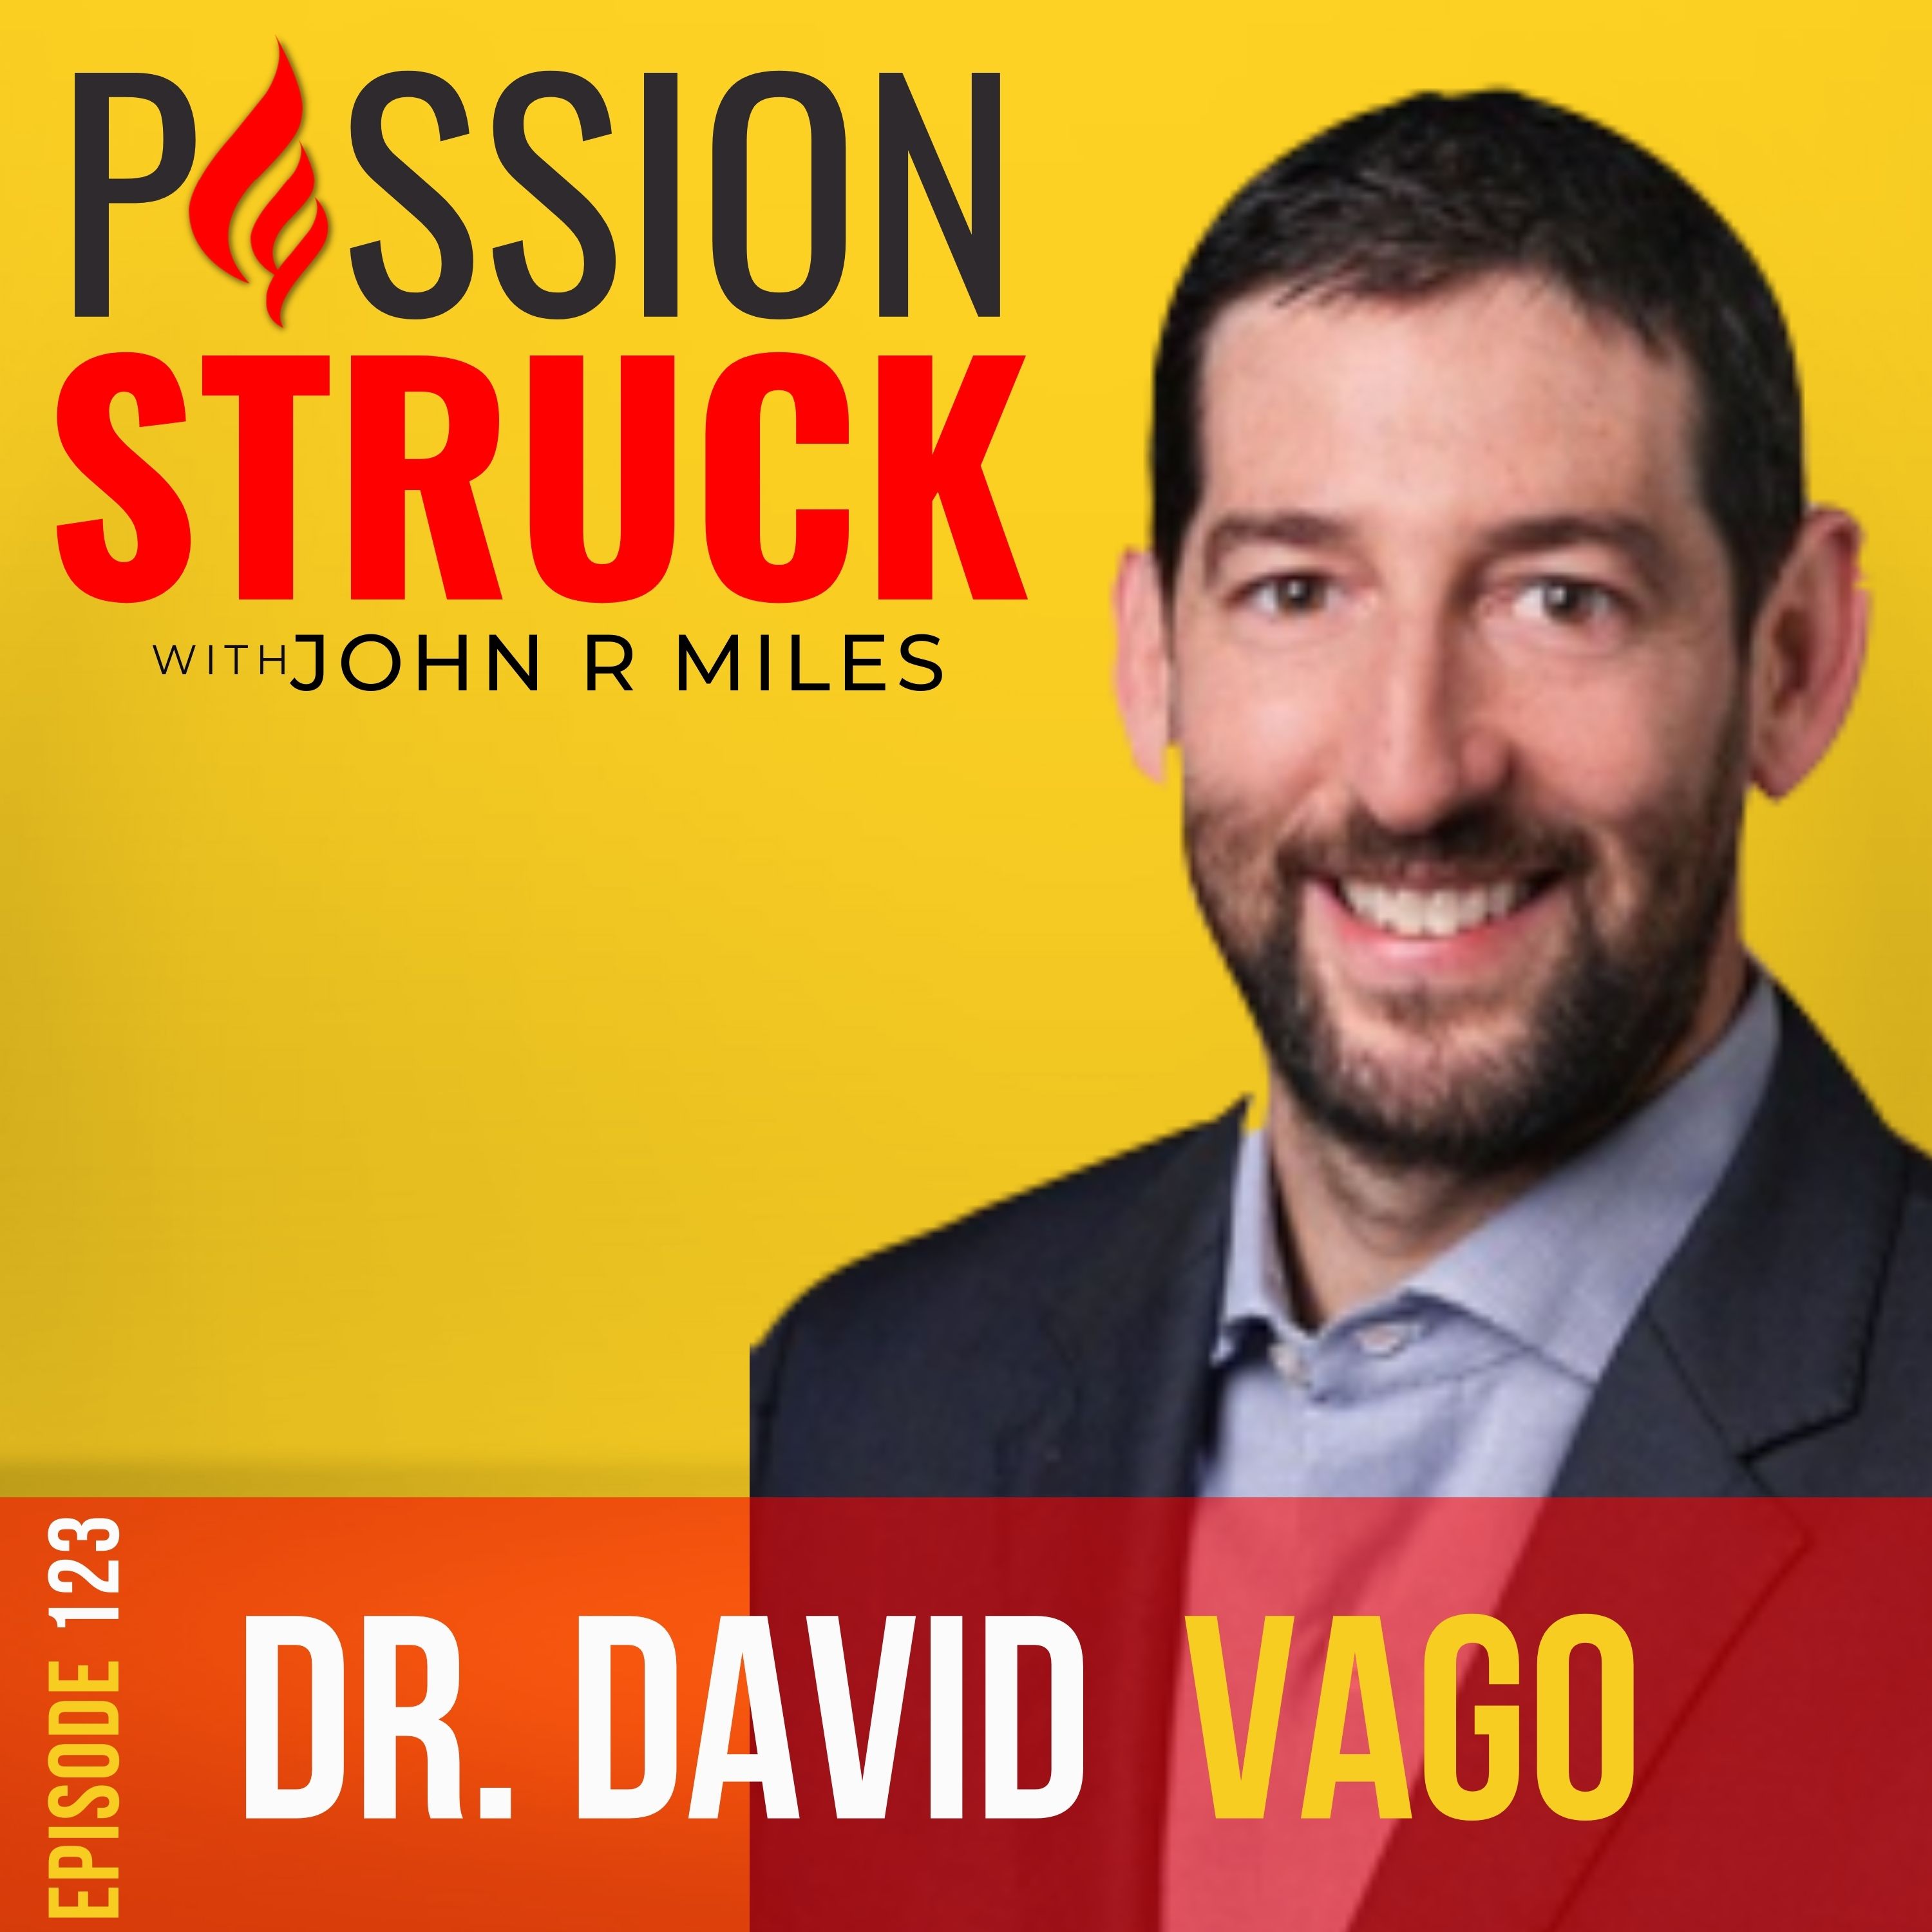 Dr. David Vago Passion Struck Podcast Cover